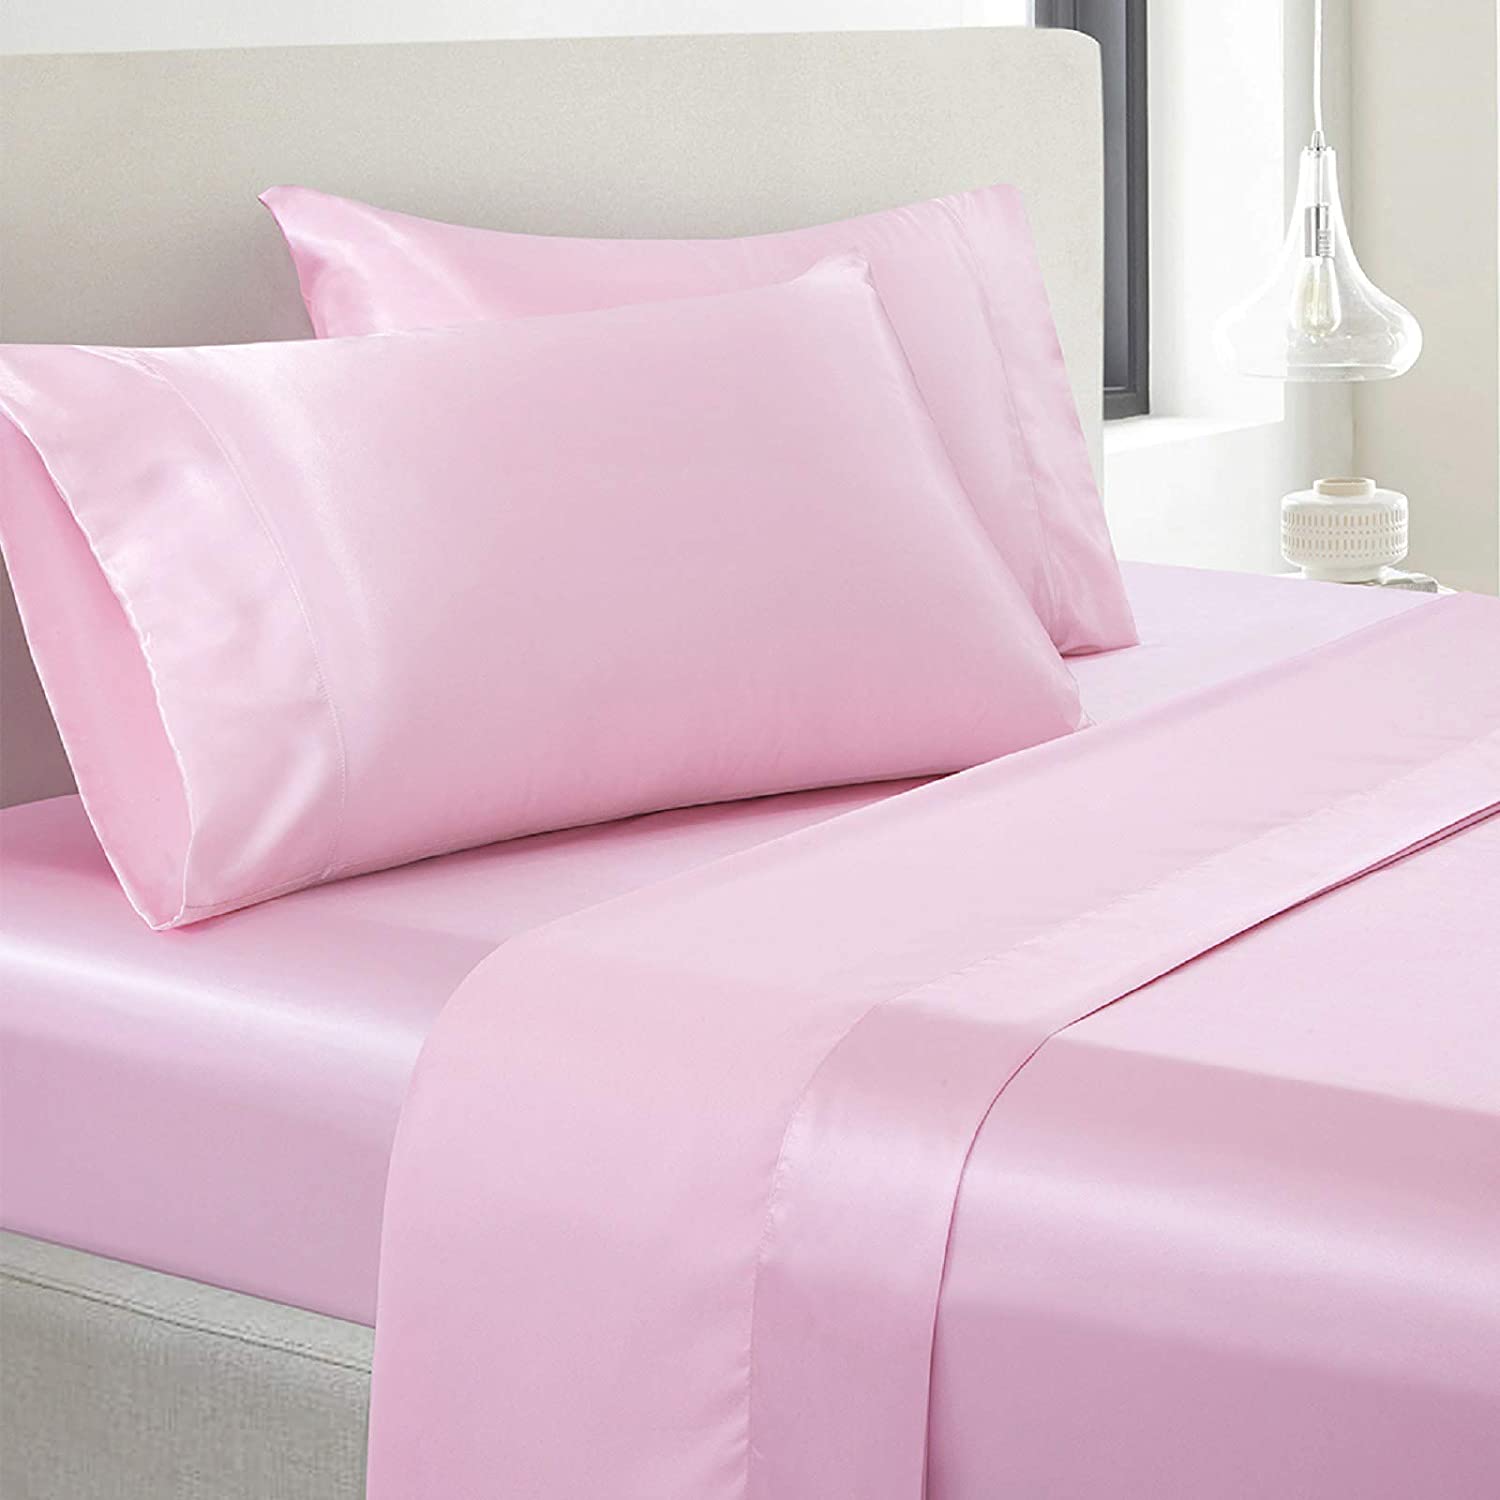 Vonty Satin Sheets Queen Size Silky Soft Satin Bed Sheets Teal Satin Sheet  Set, 